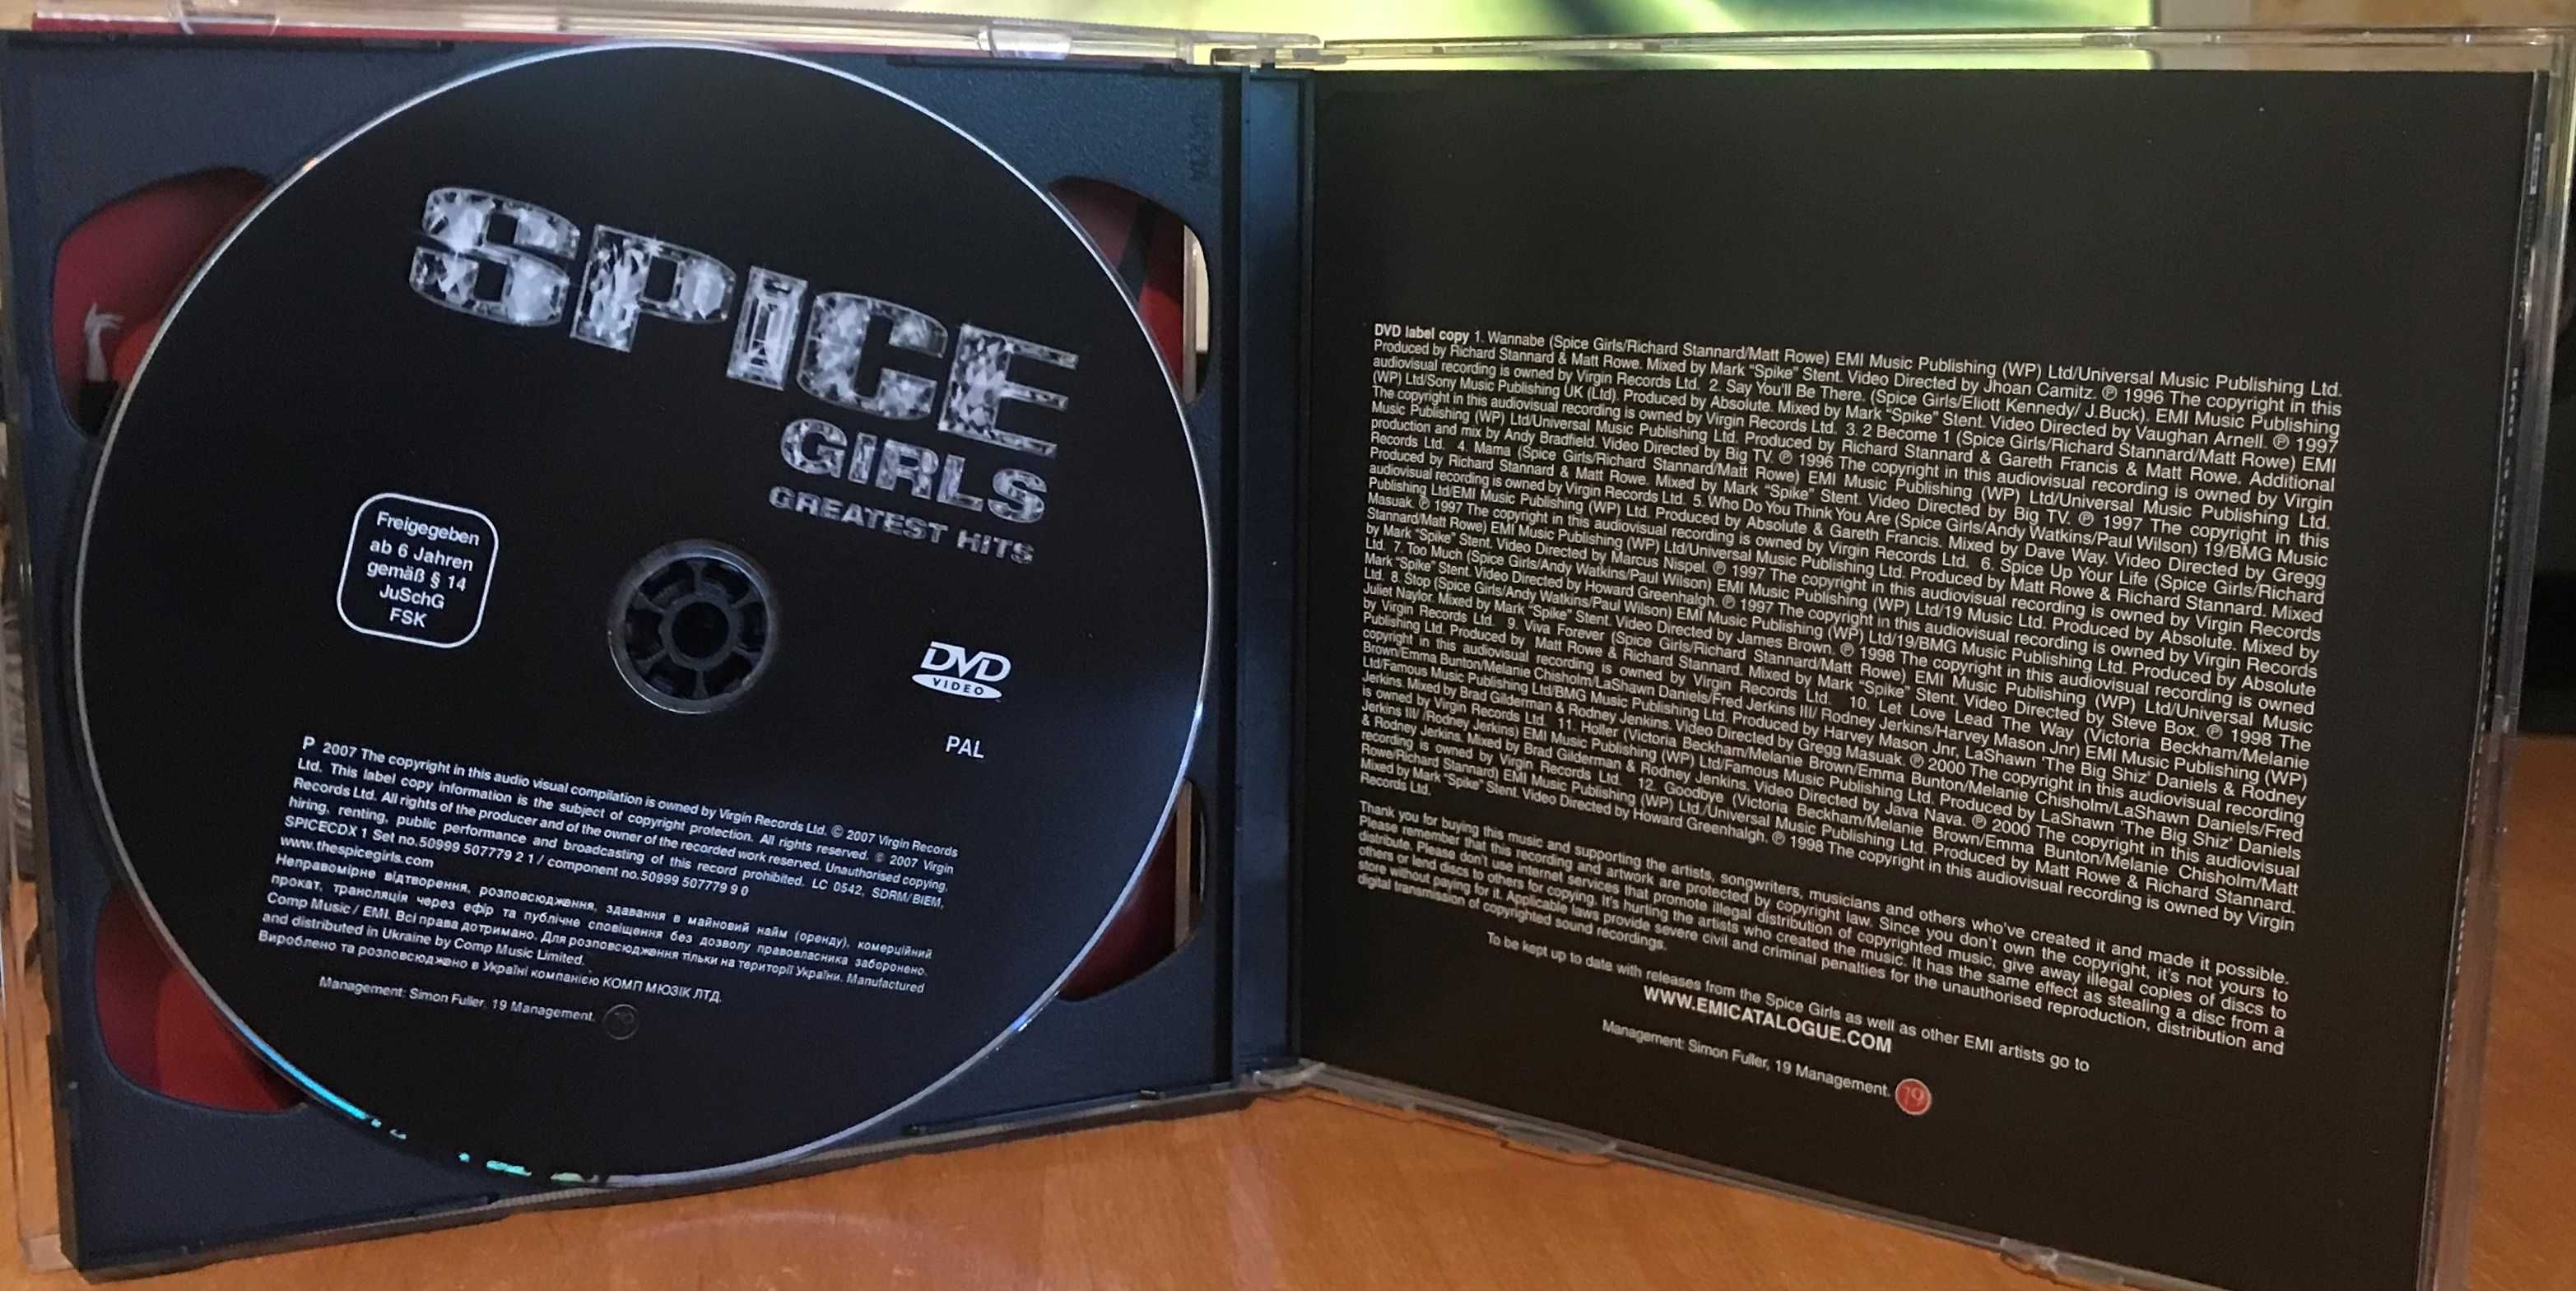 Spice Girls "Greatest Hits" (CD+DVD)